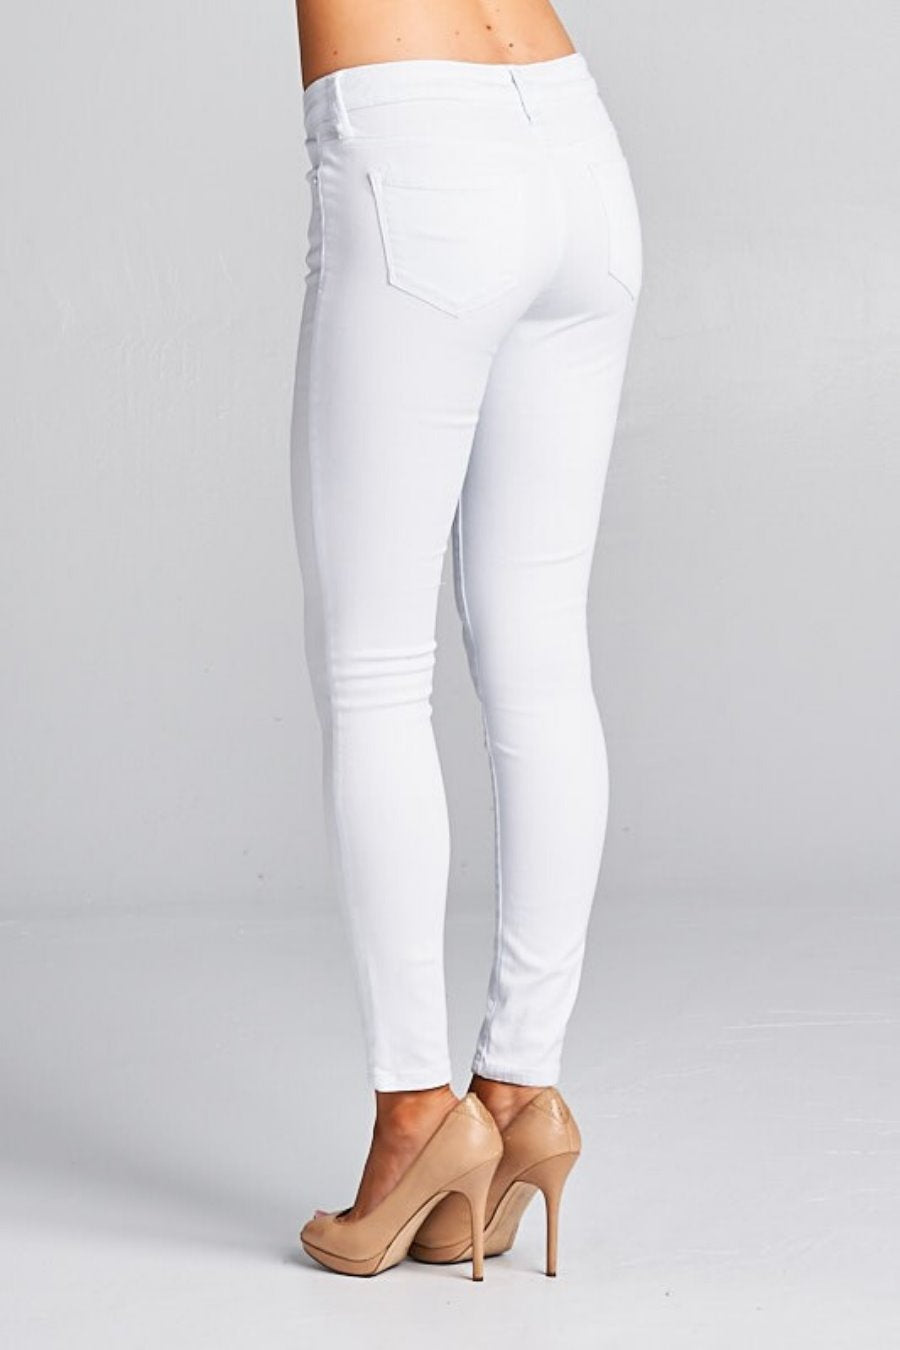 Jade White Denim Skinny Jeans - Jess Lea Boutique